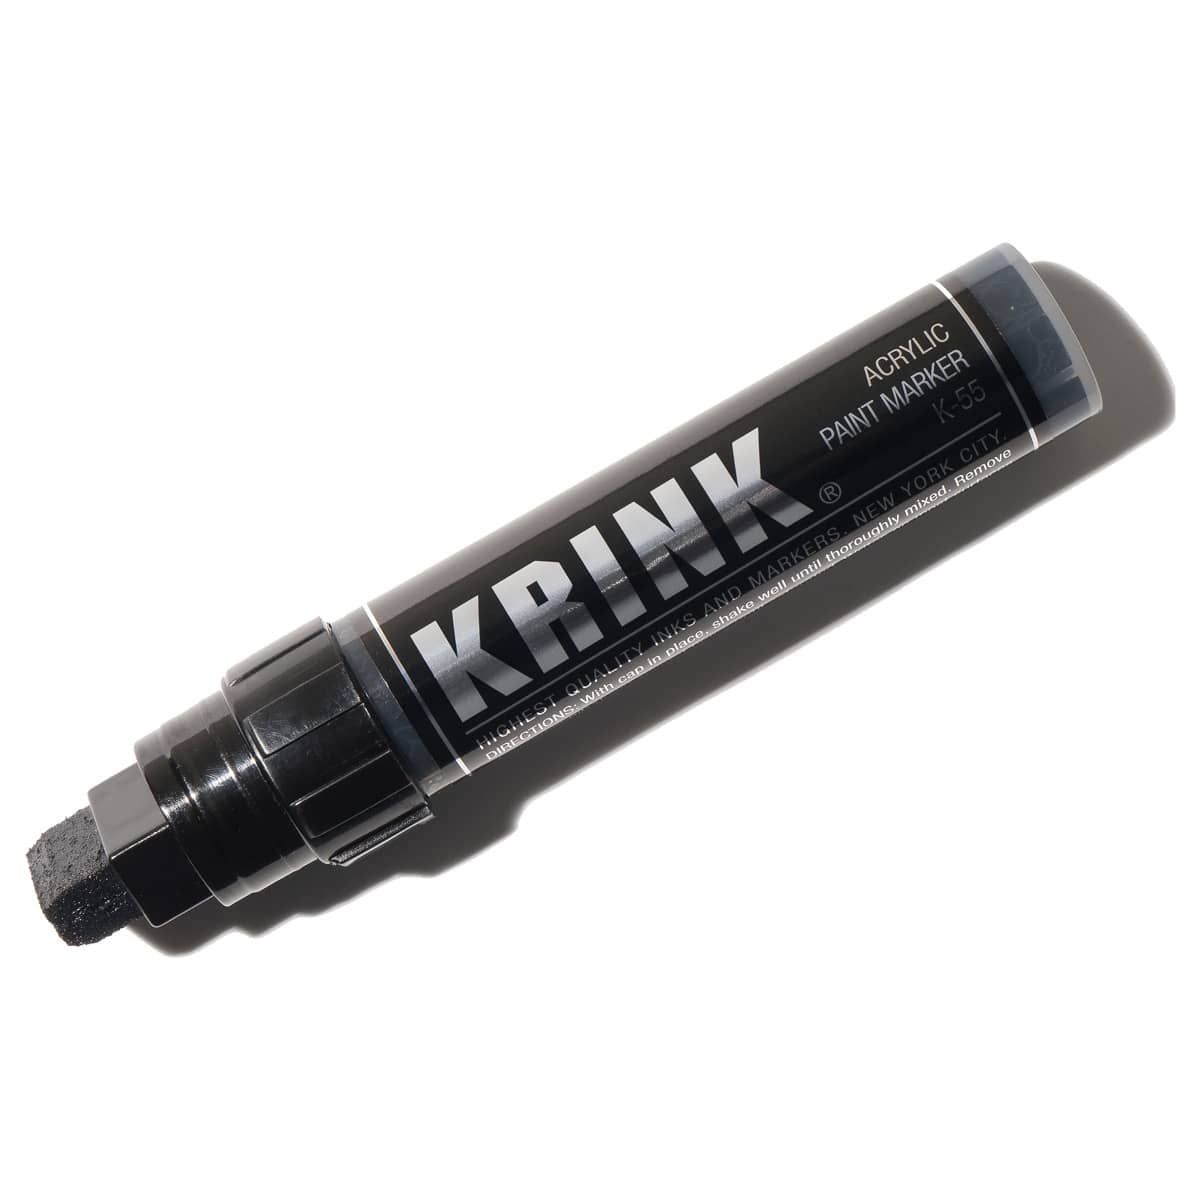 Krink K-55 Acrylic Paint Marker 15 mm Black